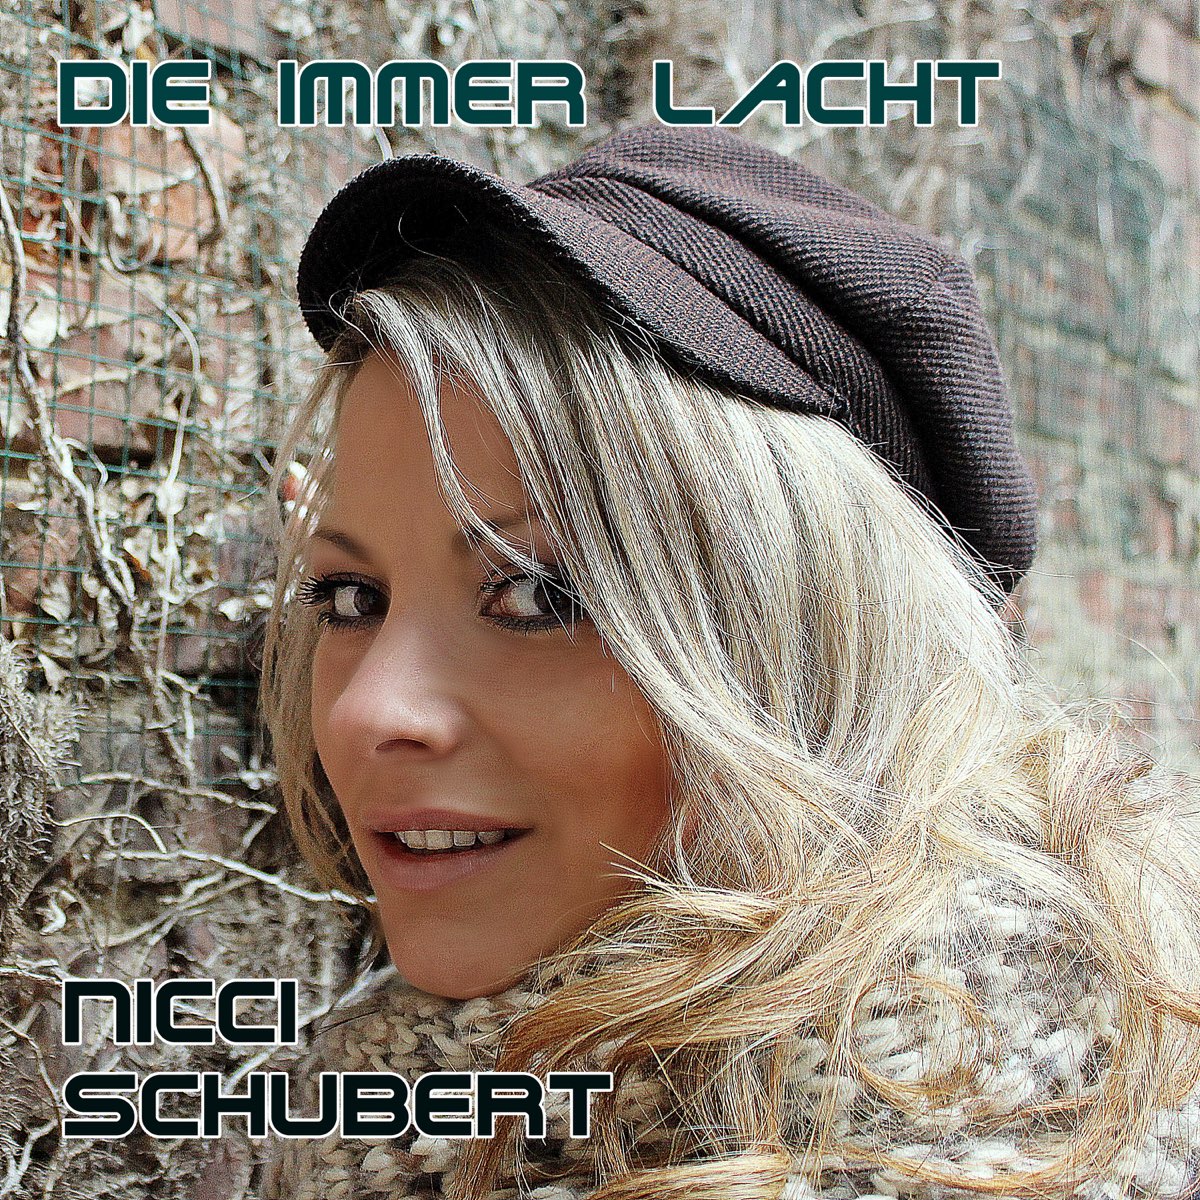 Die immer lacht - Single by Nicci Schubert on Apple Music